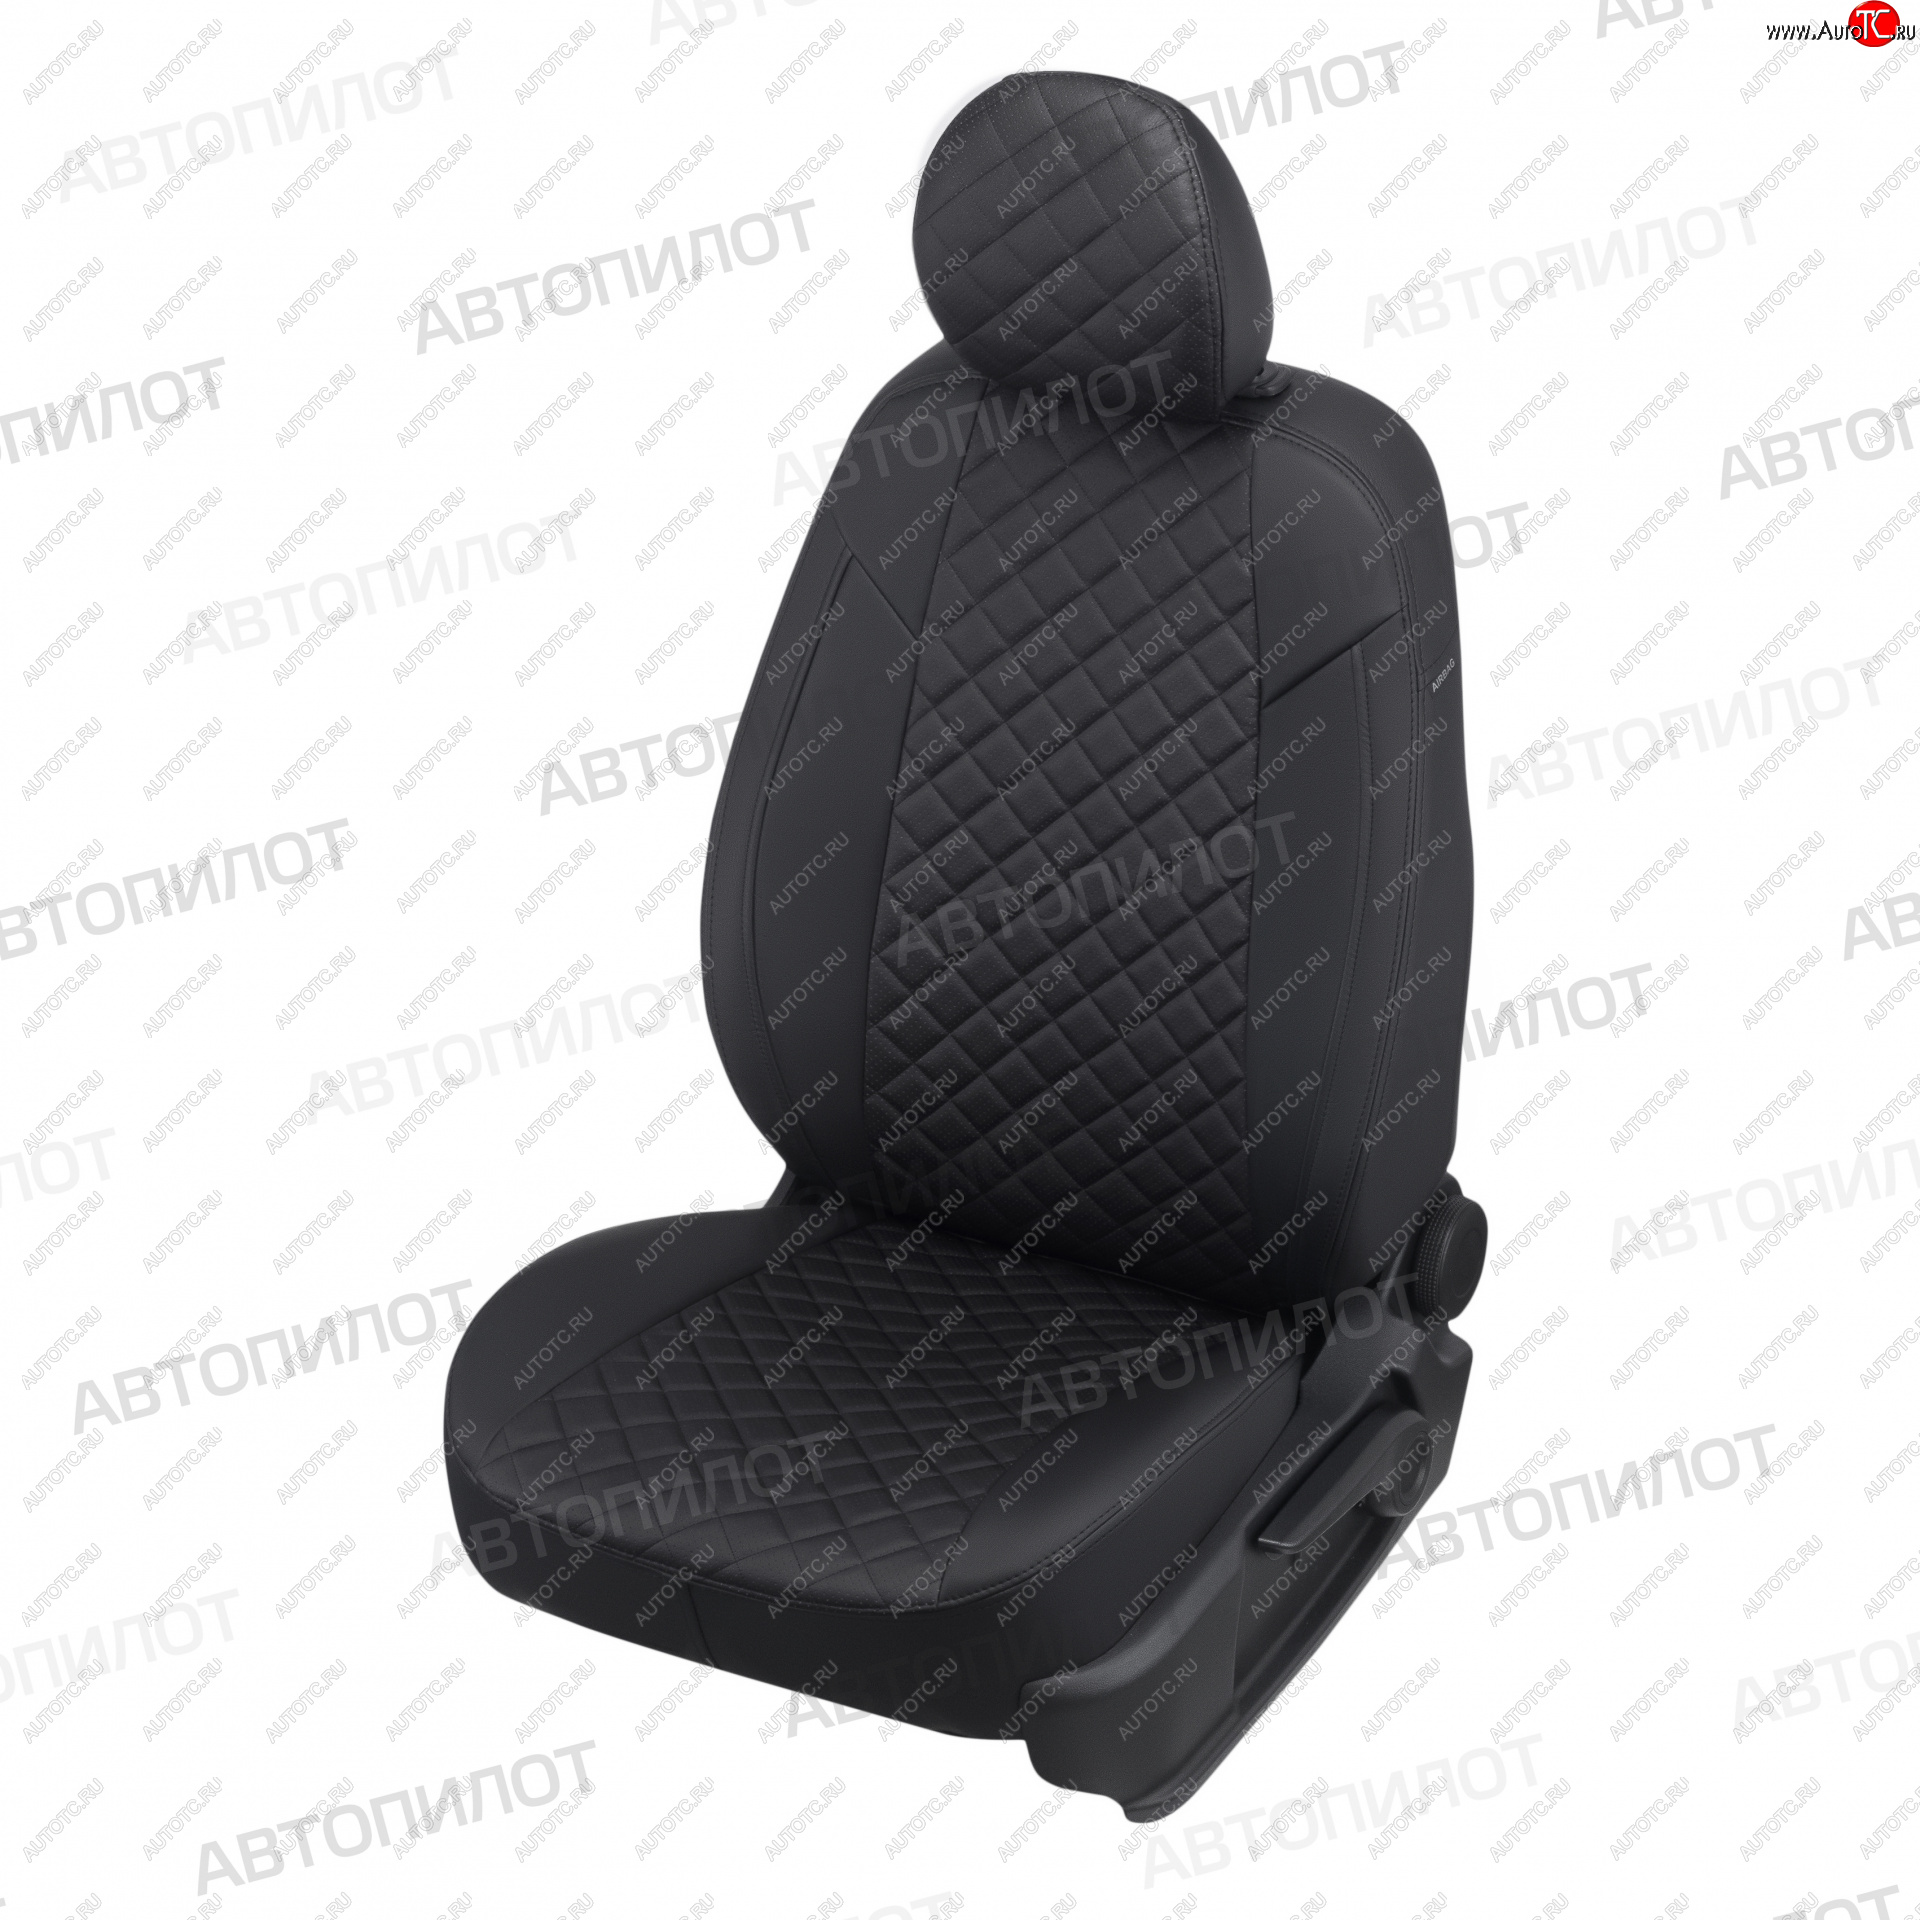 22 299 р. Чехлы сидений (экокожа, 8 мест) Автопилот Ромб  KIA Carnival  KA4 (2020-2024) (черный)